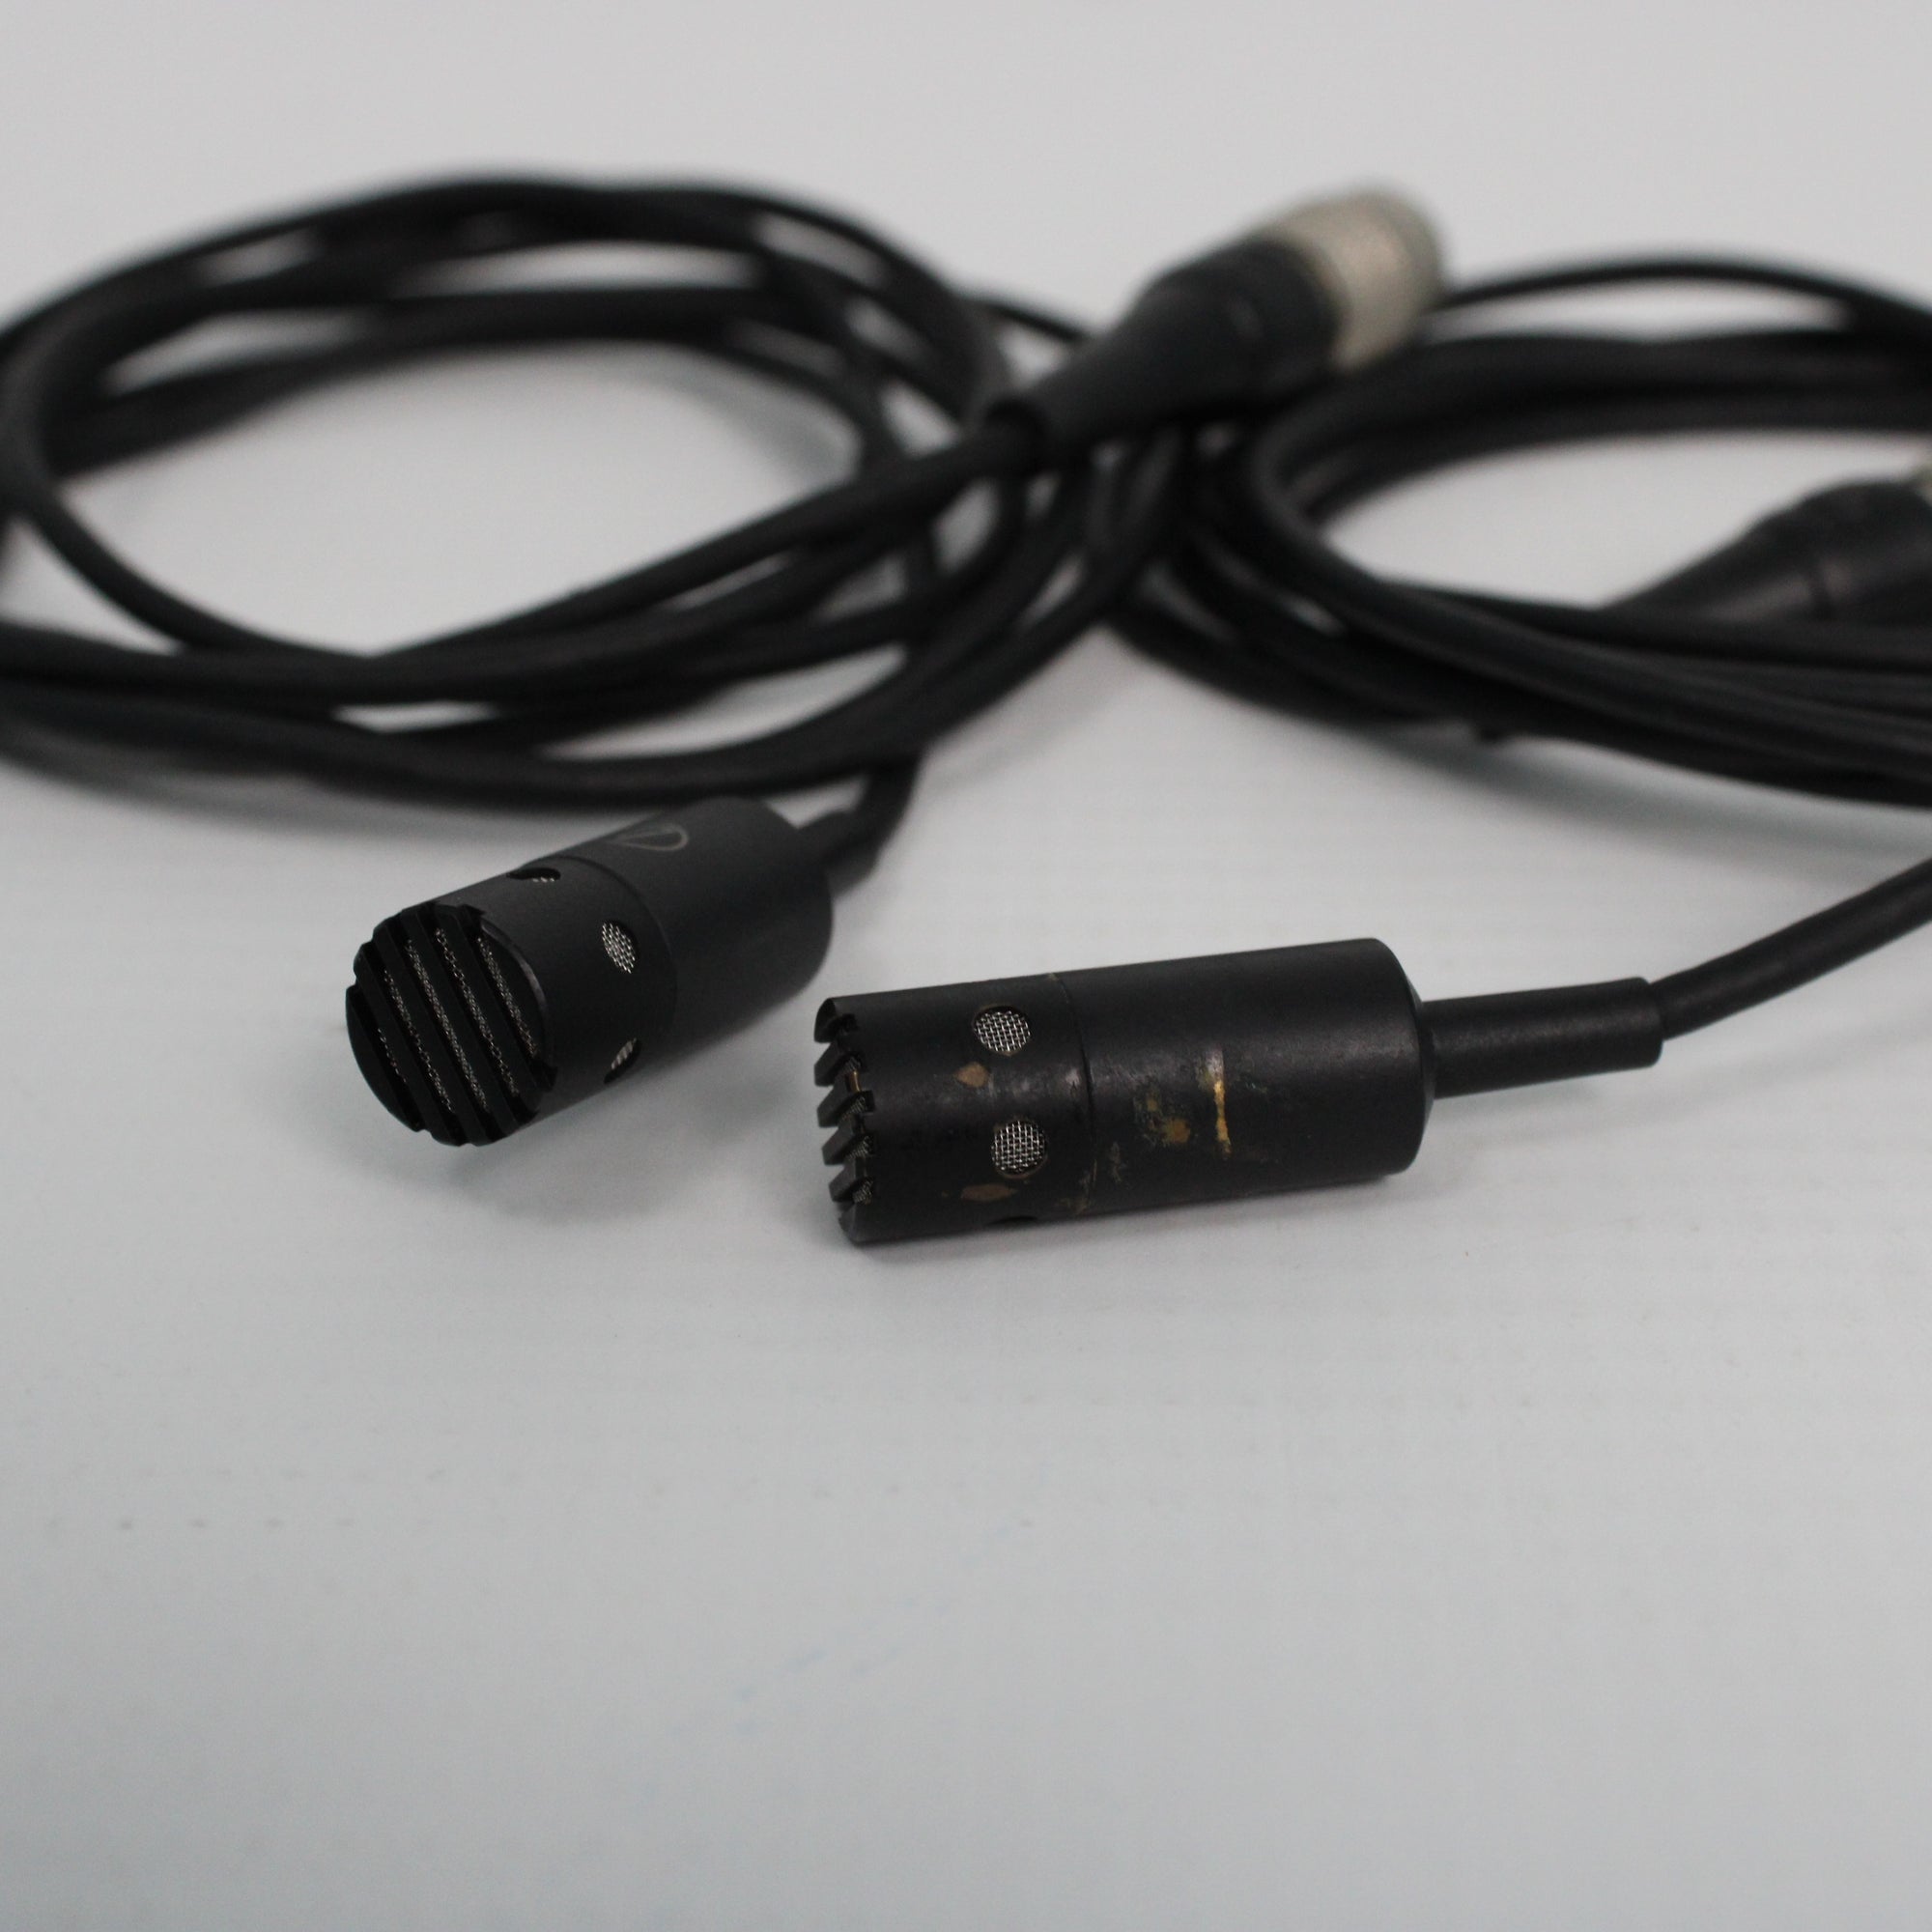 USED Audio Technica AT831cW Lapel Microphones x2 Close-up mics